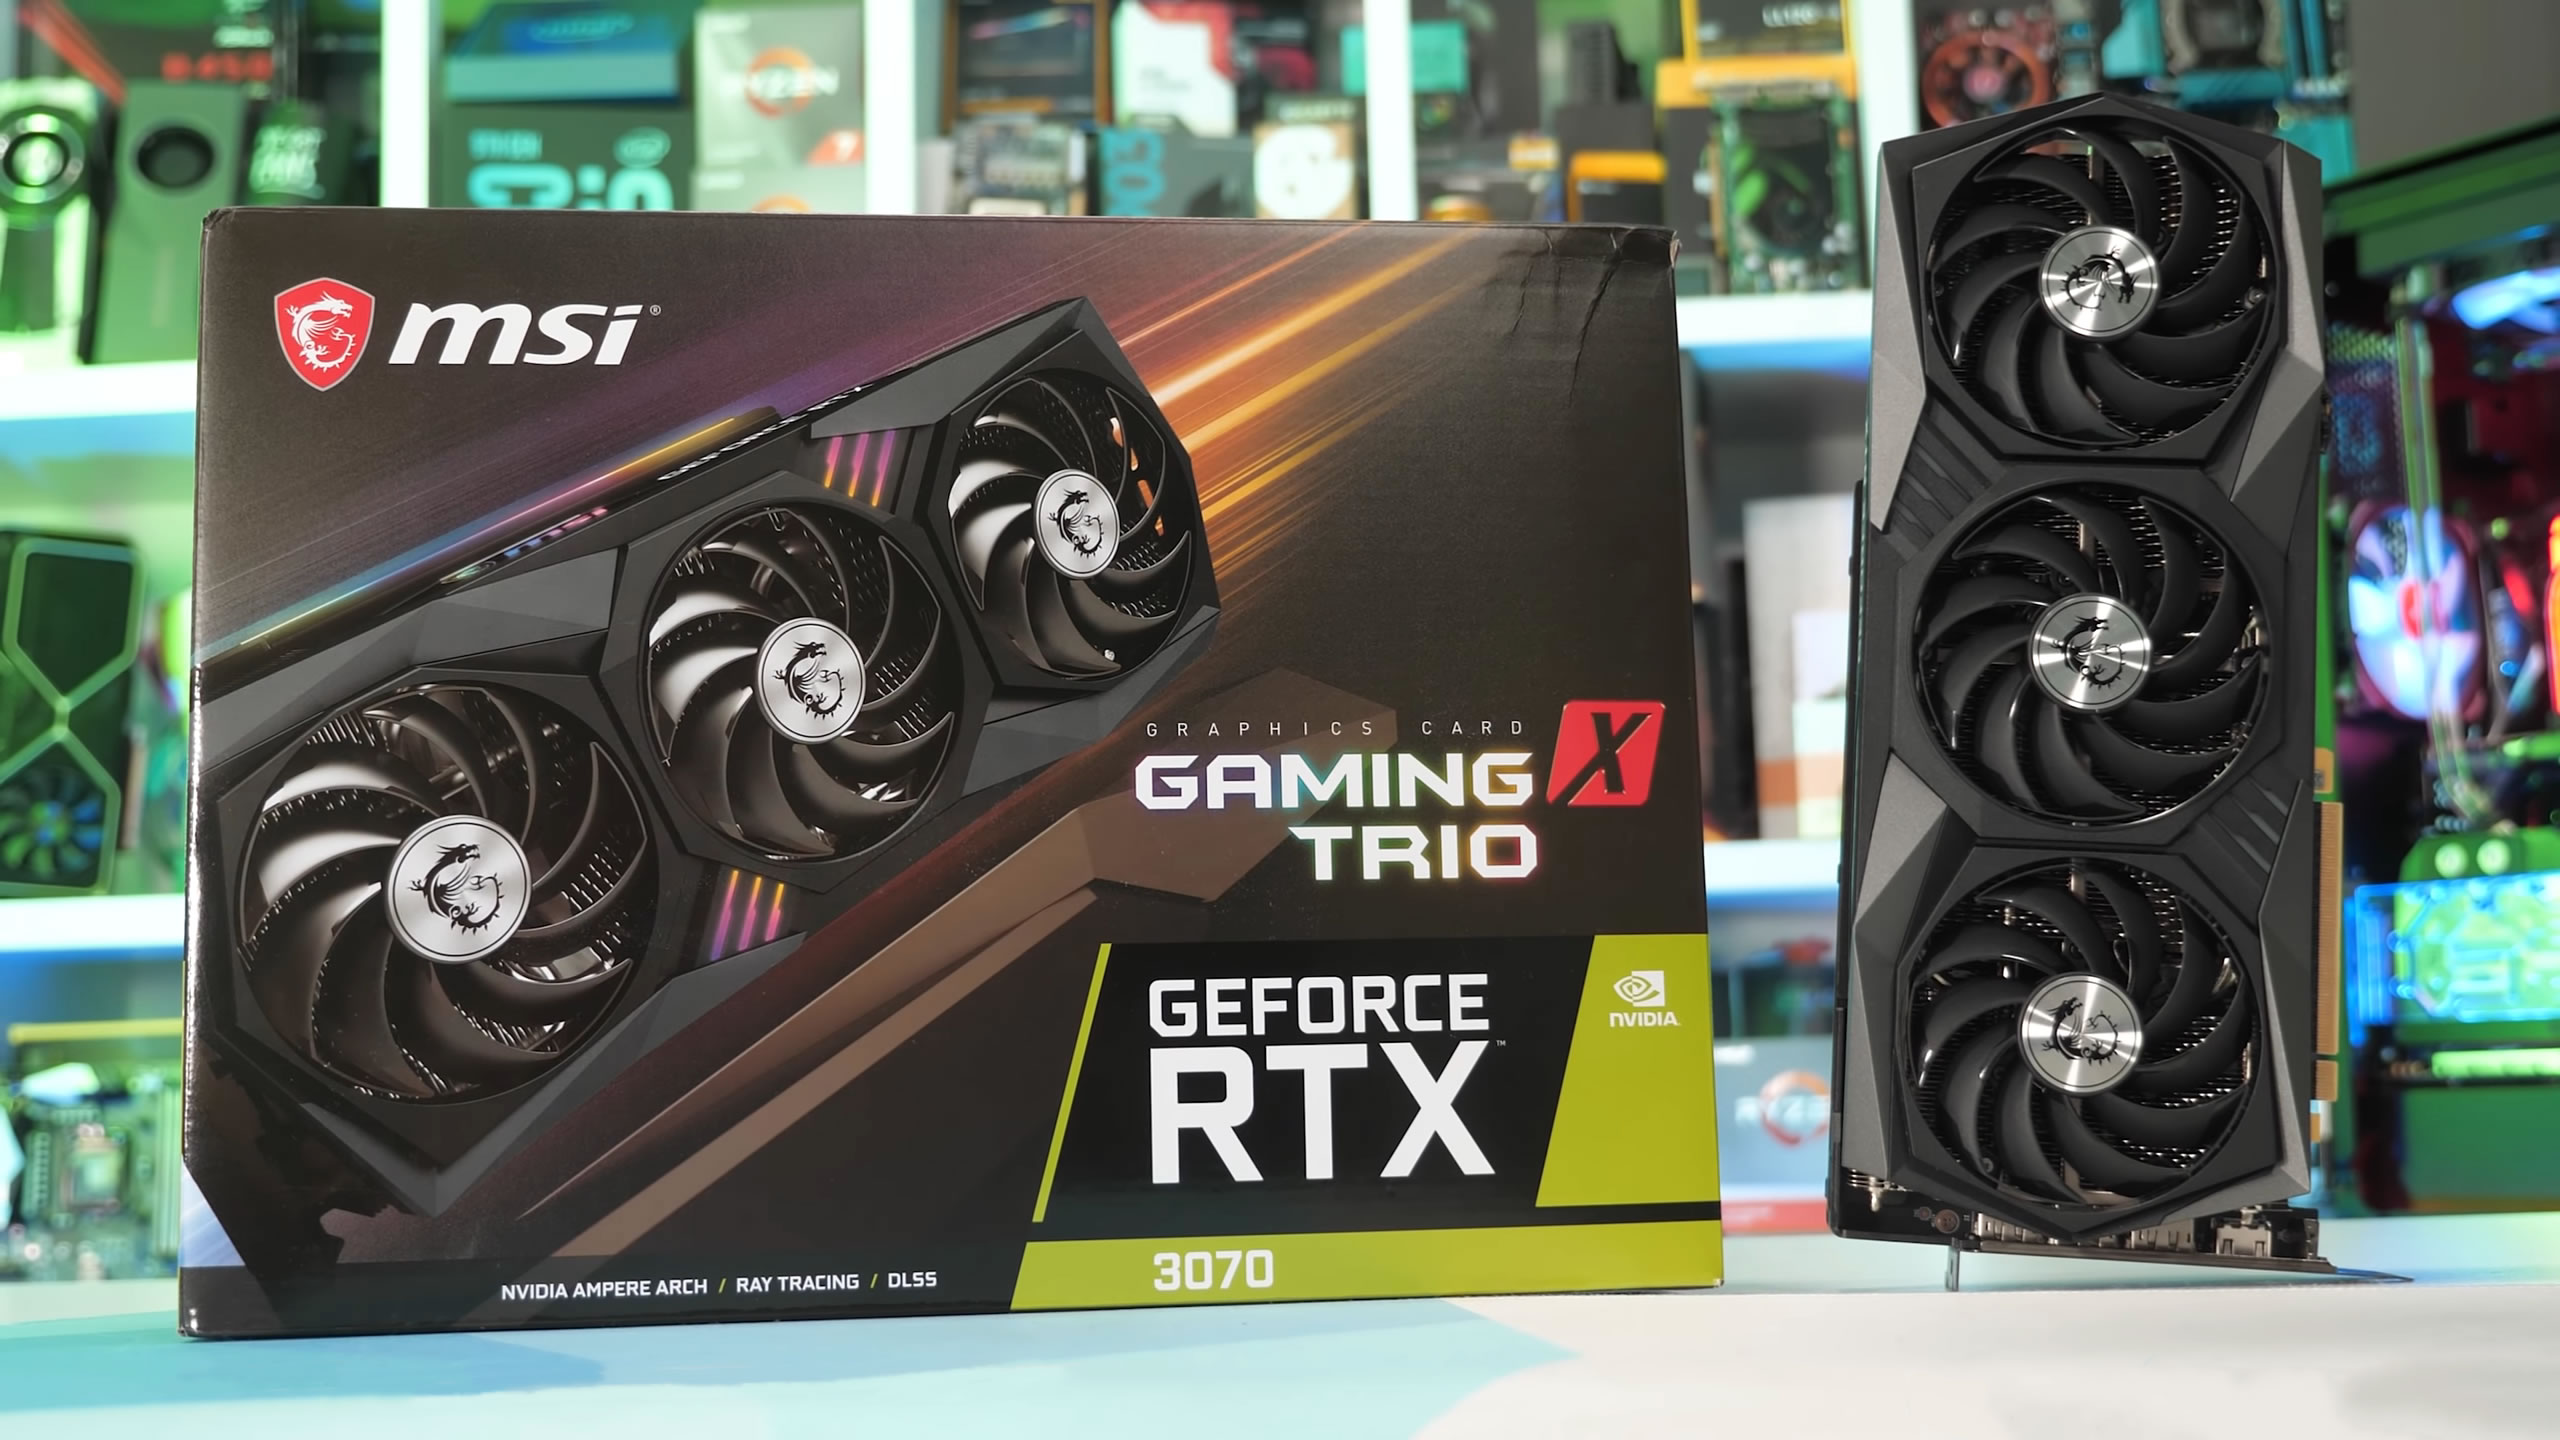 Asus GeForce RTX 3070 TUF Gaming and MSI GeForce RTX 3070 Gaming X